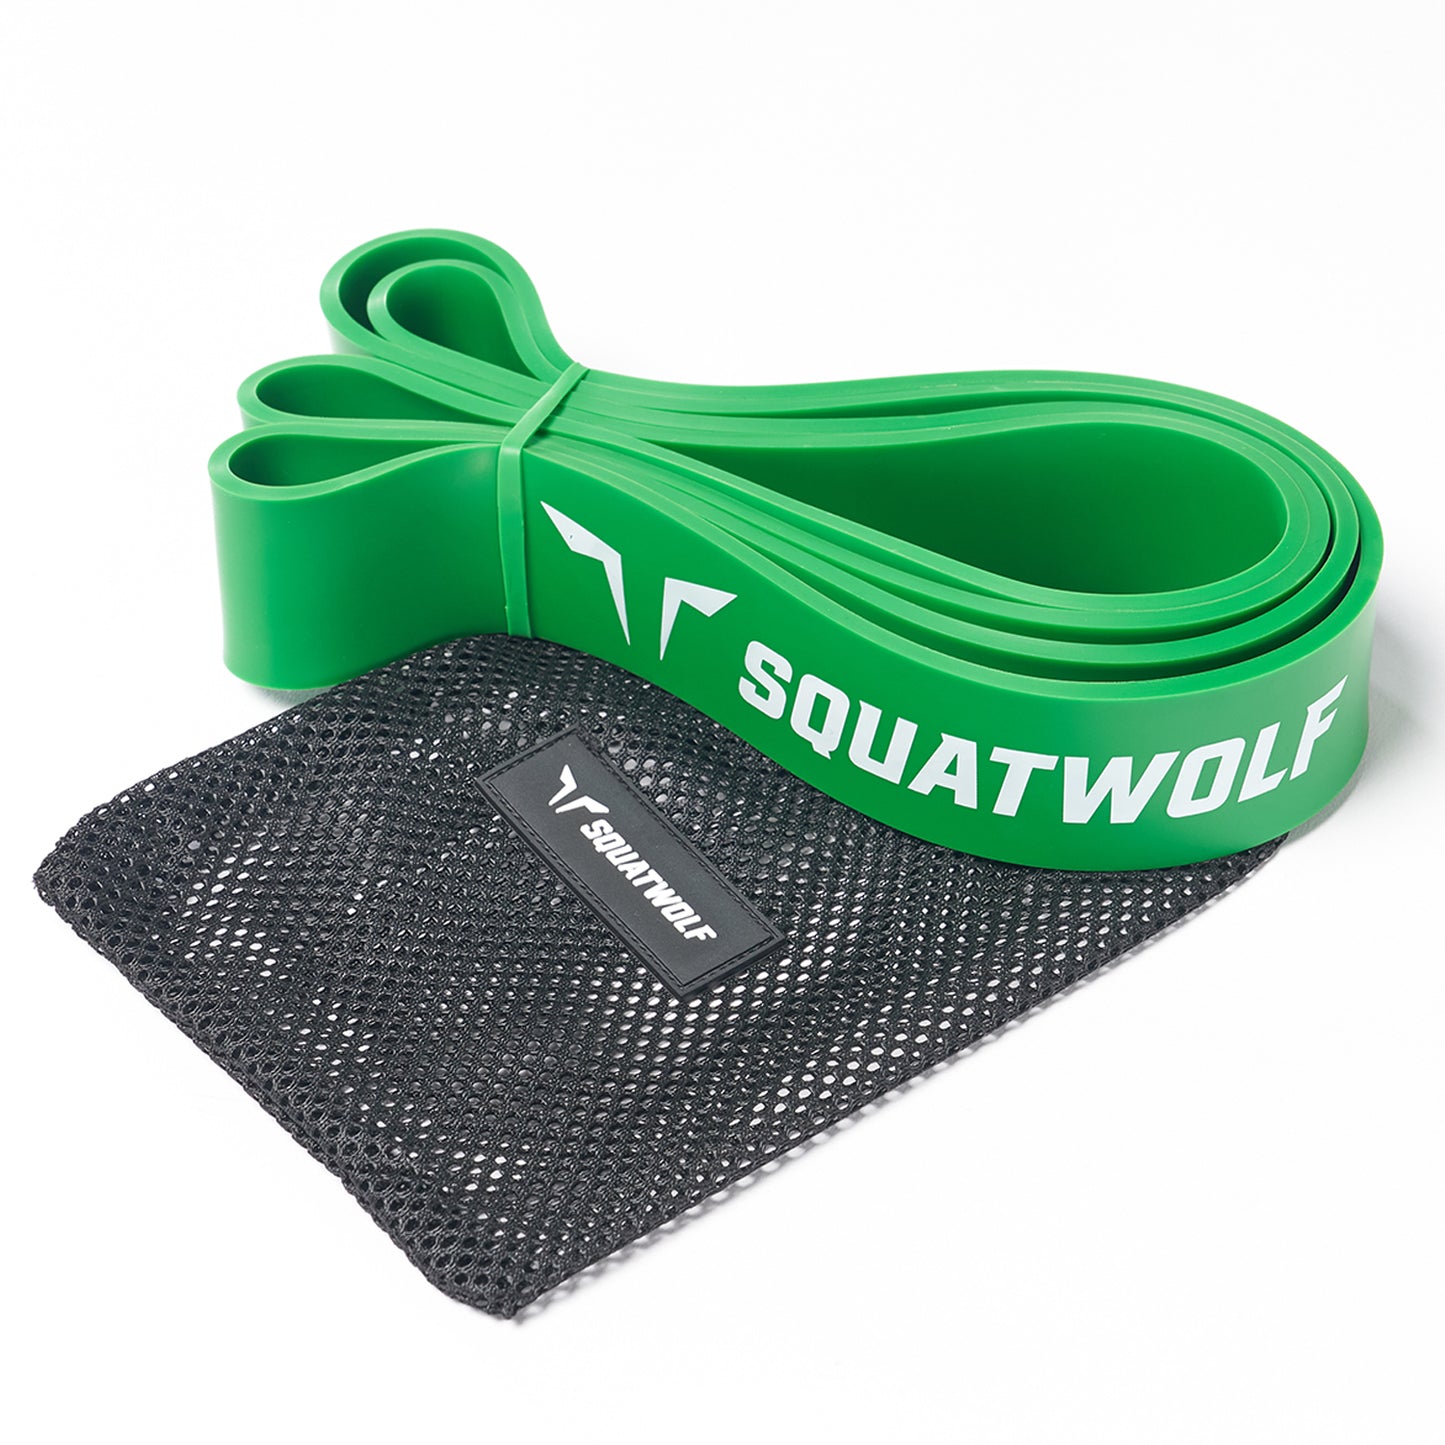 squatwolf-gym-wear-squatwolf-power-band-heavy-workout